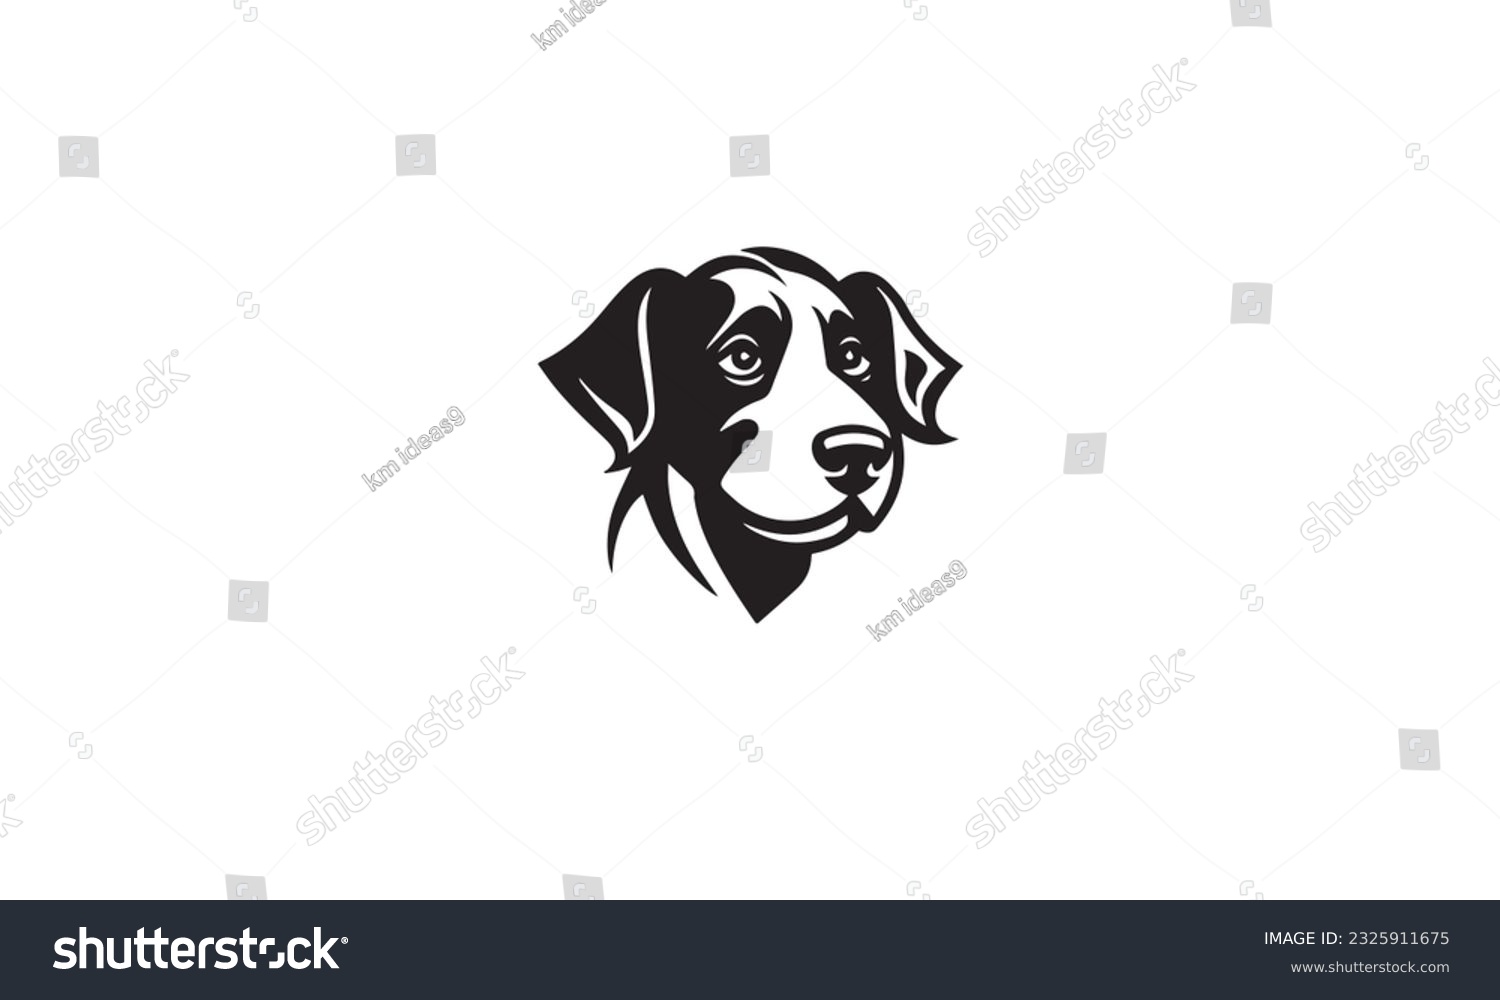 SVG of dog logo black simple flat icon on white background svg